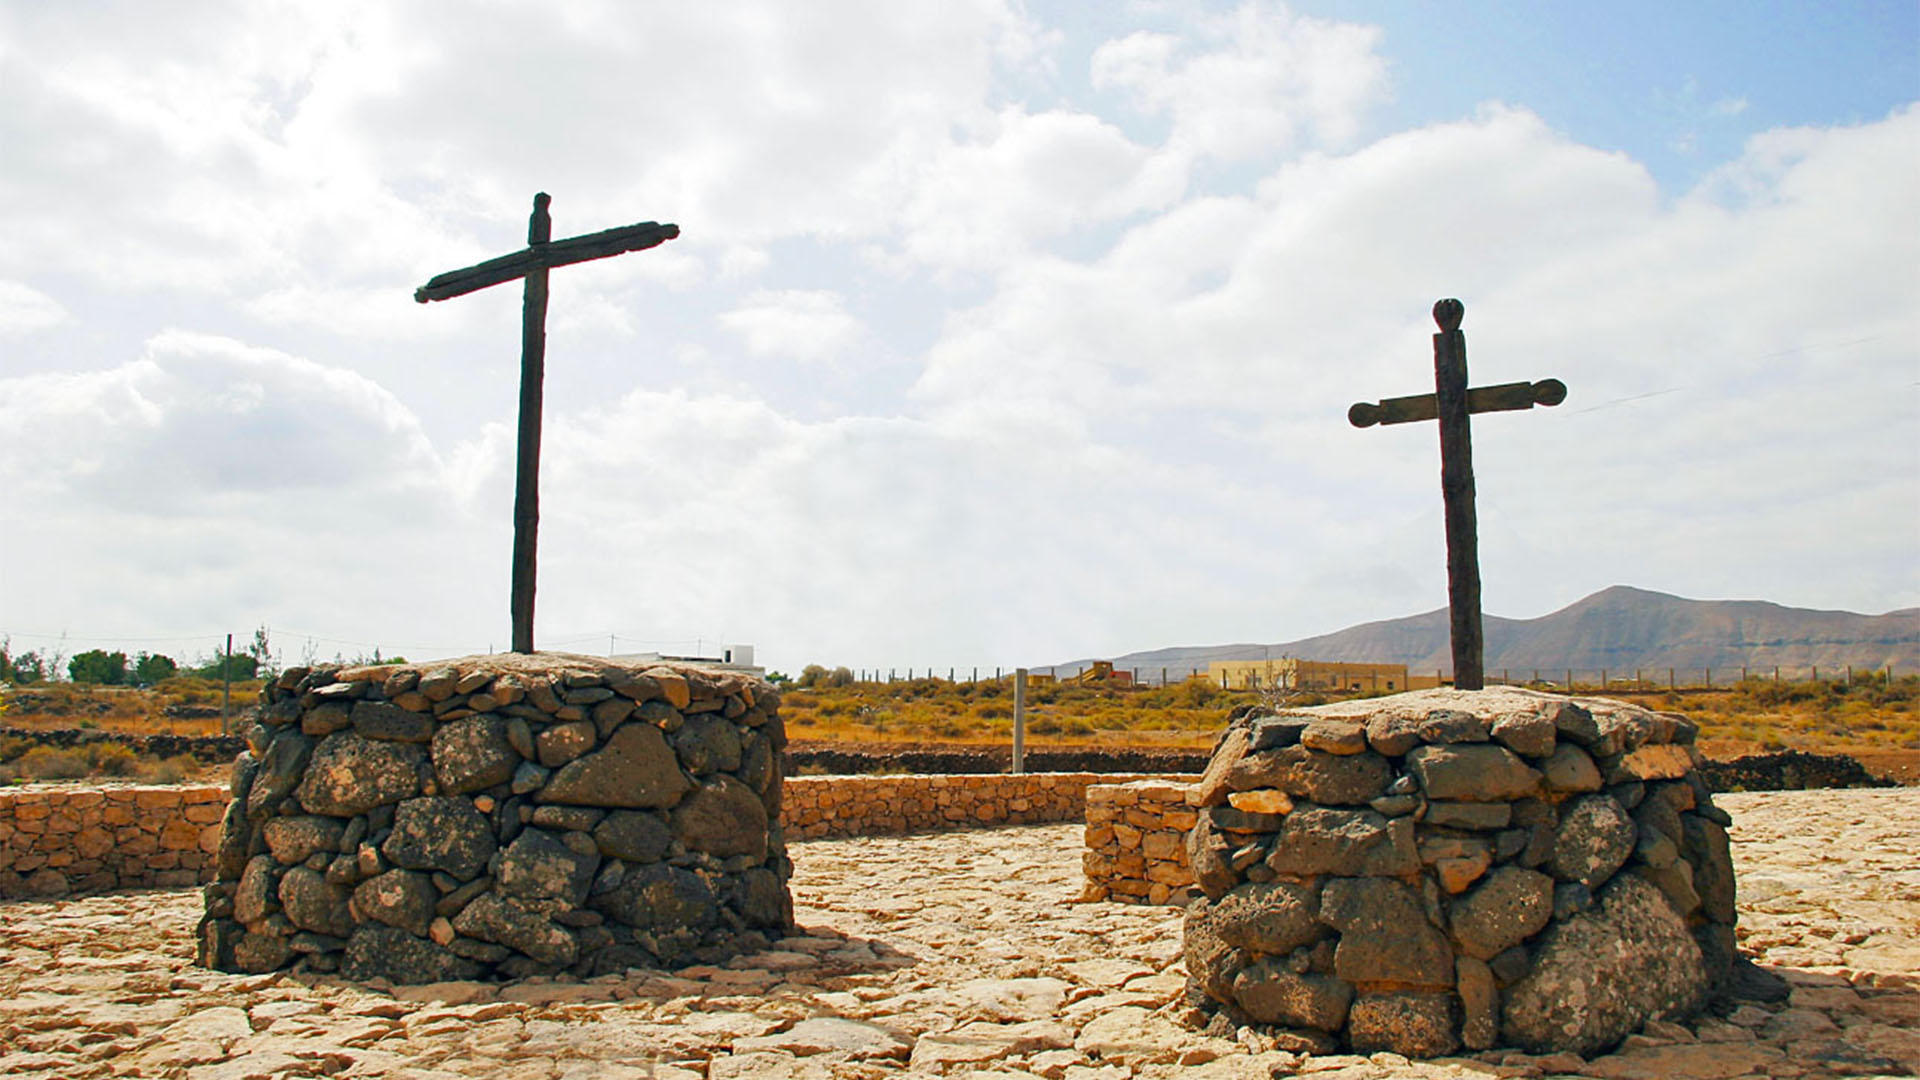 Cruces de Tesjuates bei Casillas del Ángel Fuerteventura.